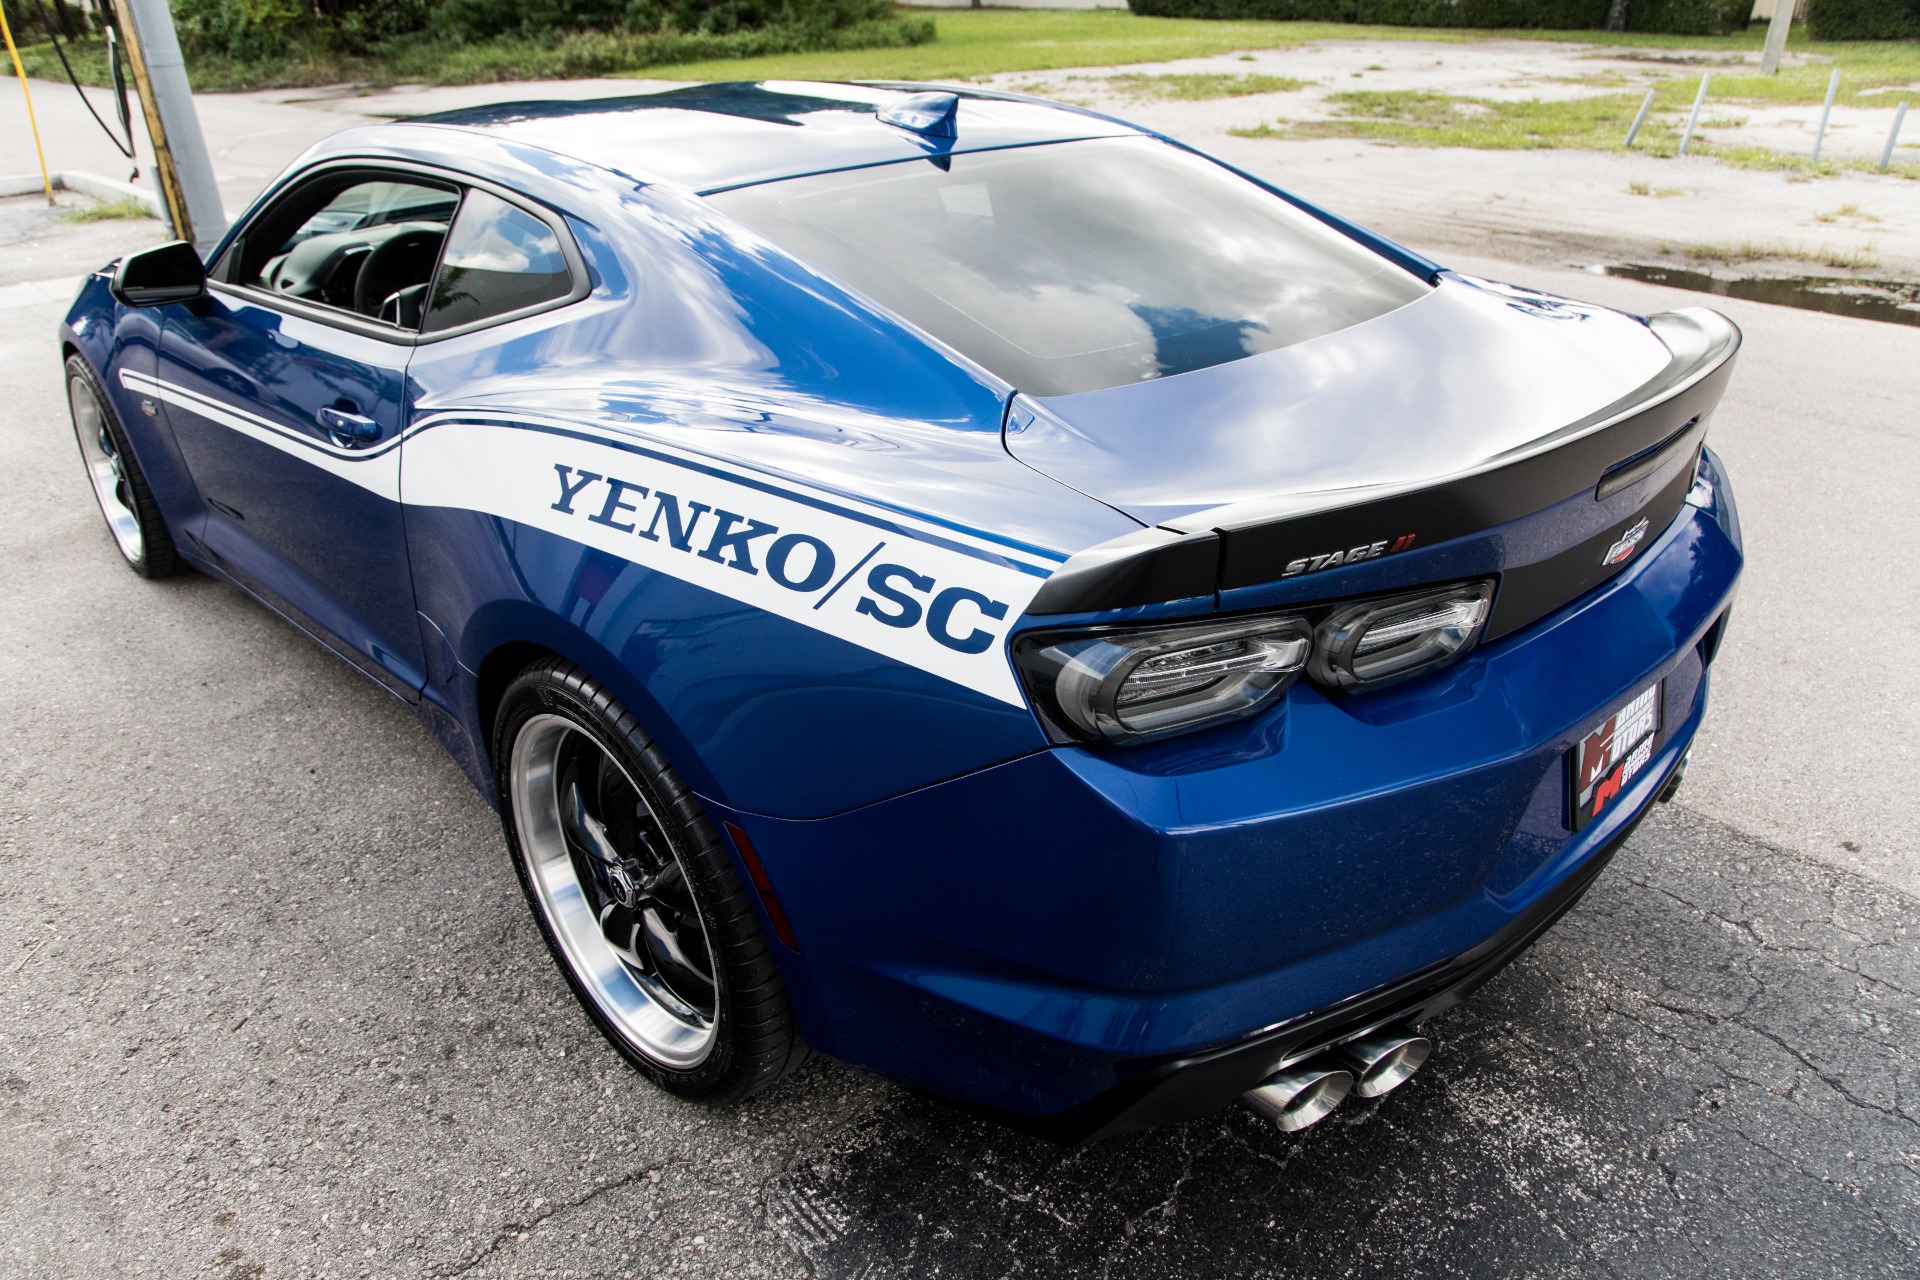 Used 2019 Chevrolet Camaro SS Yenko/Sc Stage 2 For Sale (109,900